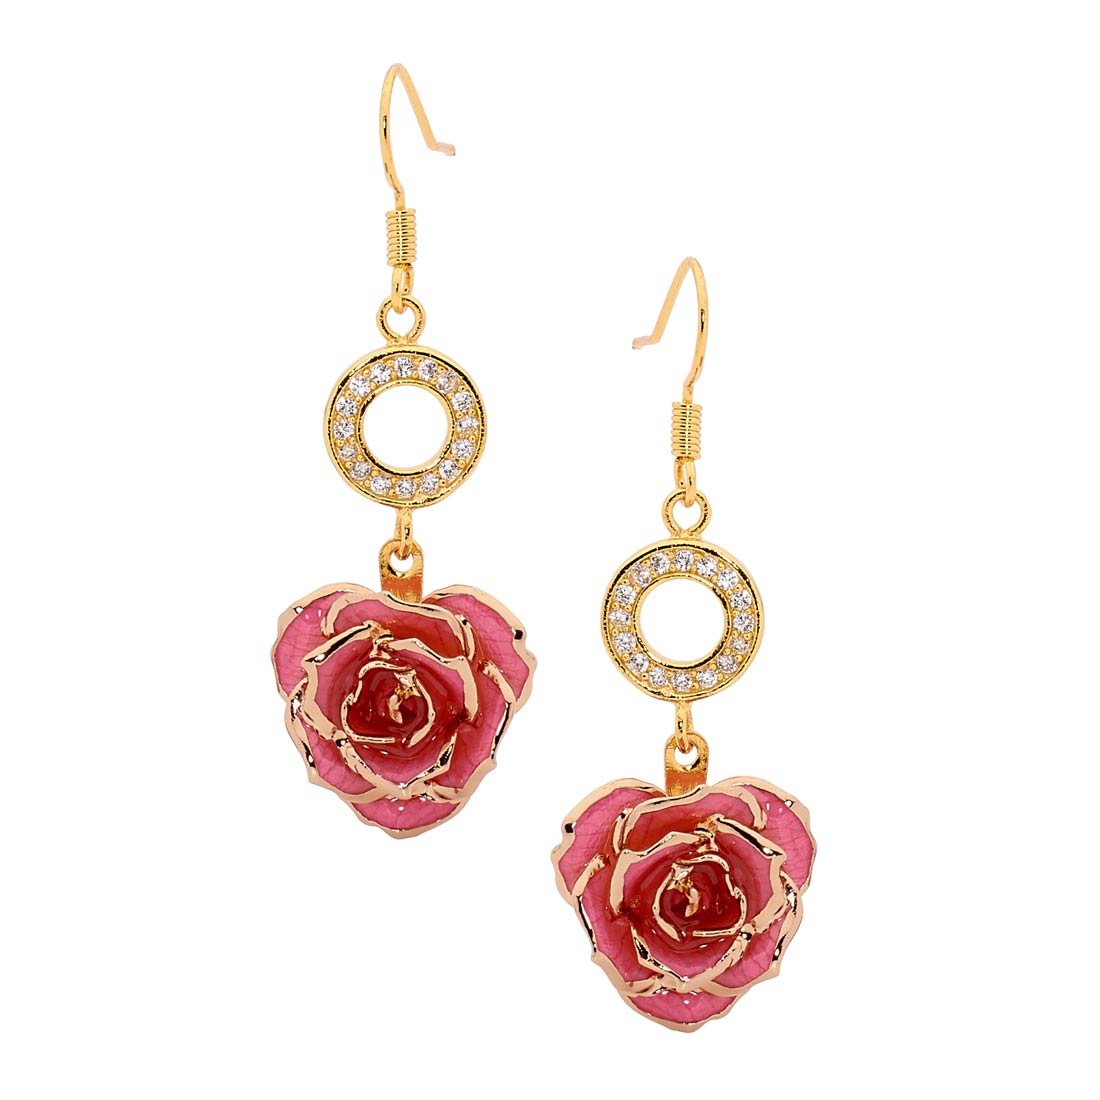 Pink Glazed Rose Earrings in 24K Gold Leaf Style